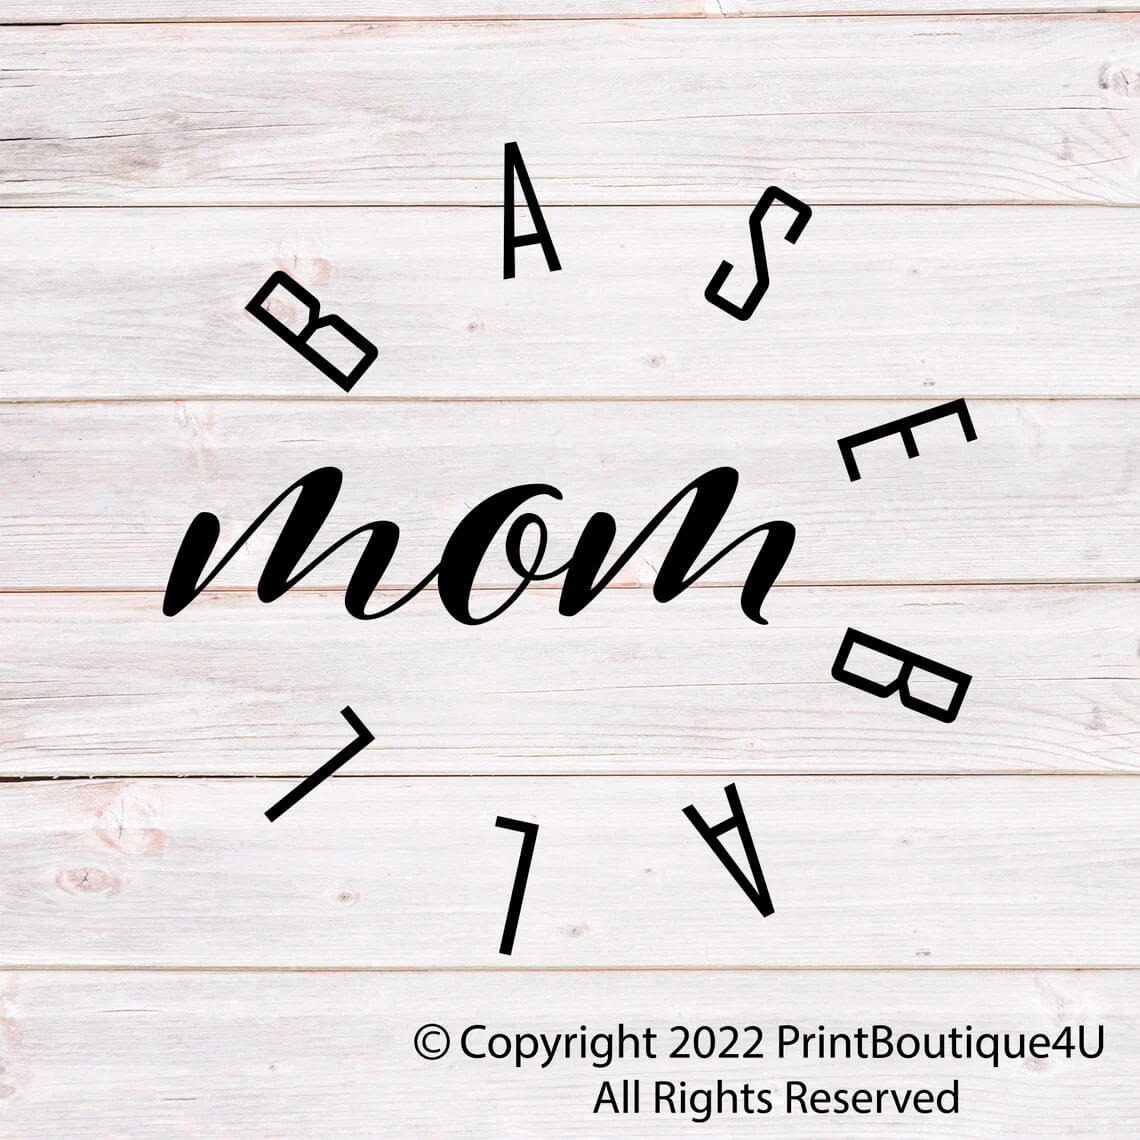 Logo: Baseball Mom. Inscription: Copyright 2022 PrintBoutique4U, All Rights Reserved.